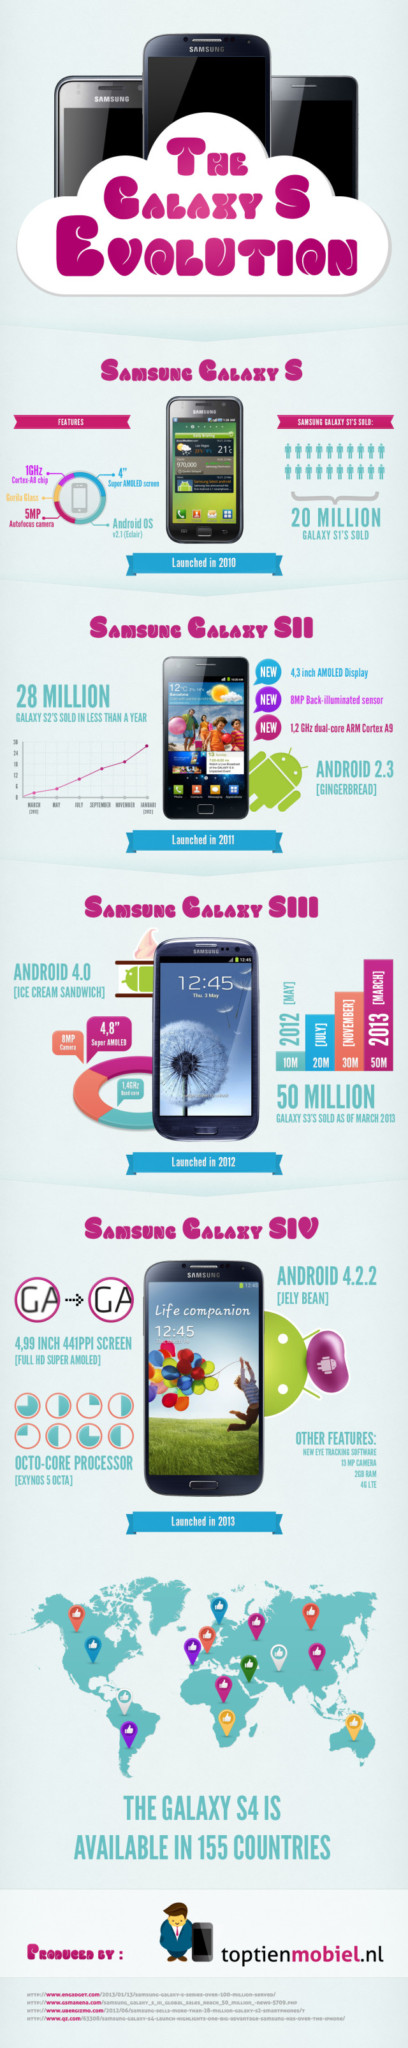 samsung-galaxy-s-evolution-infographic-1